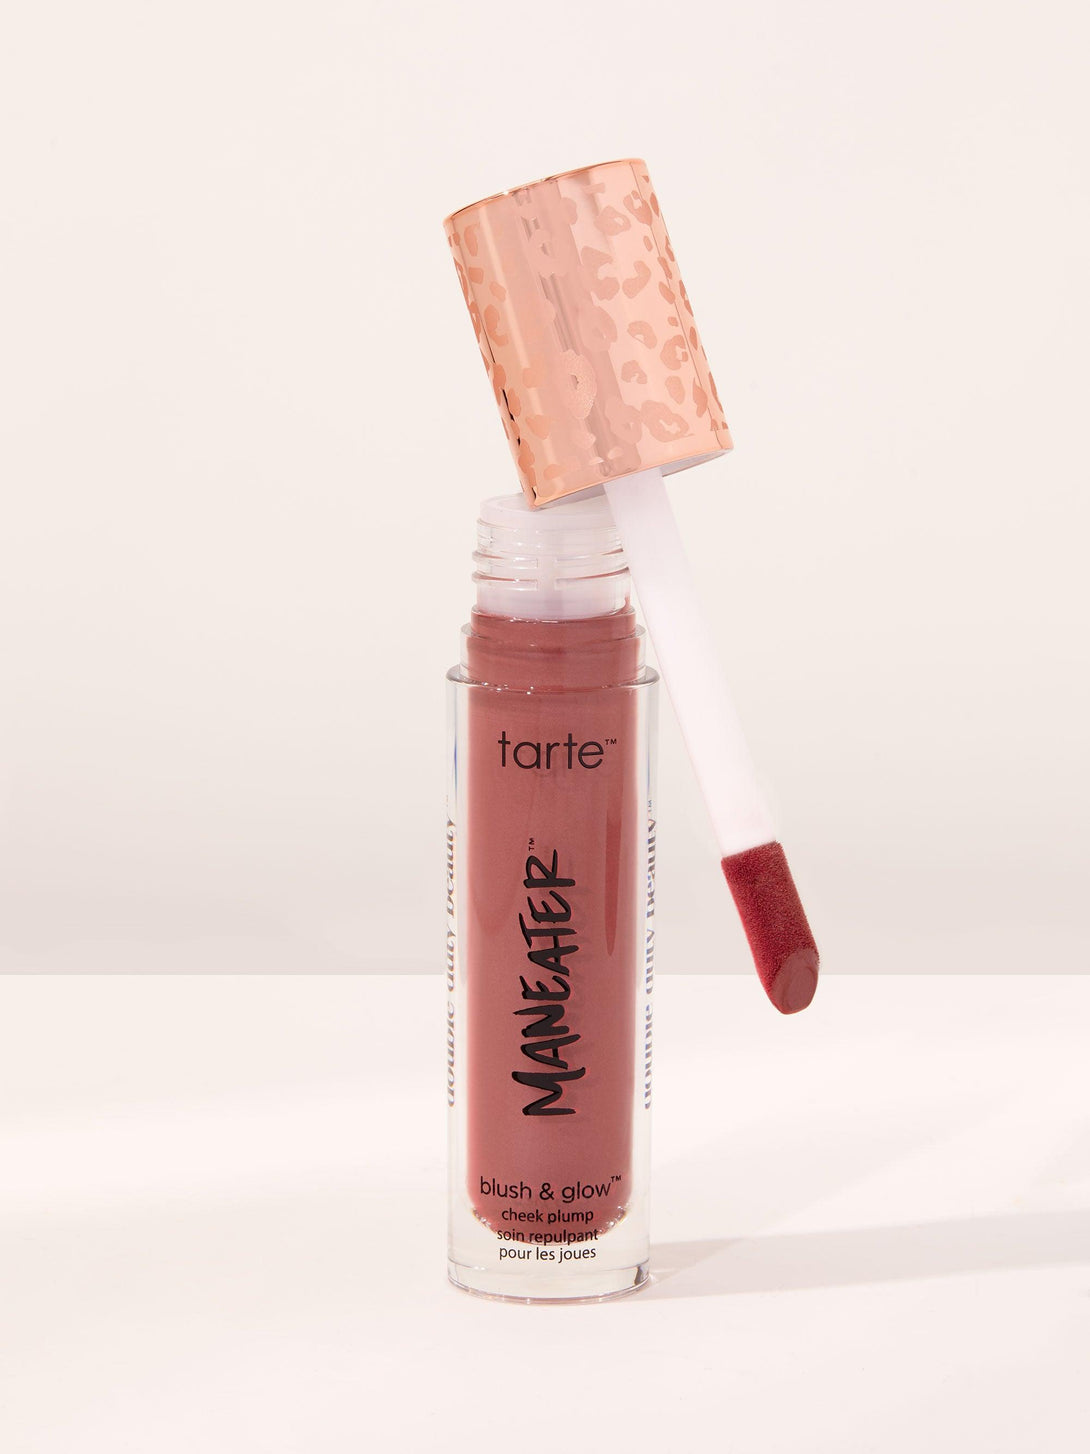 Tarte-maneater™ blush & glow™ cheek plump - Cosmetic Holic